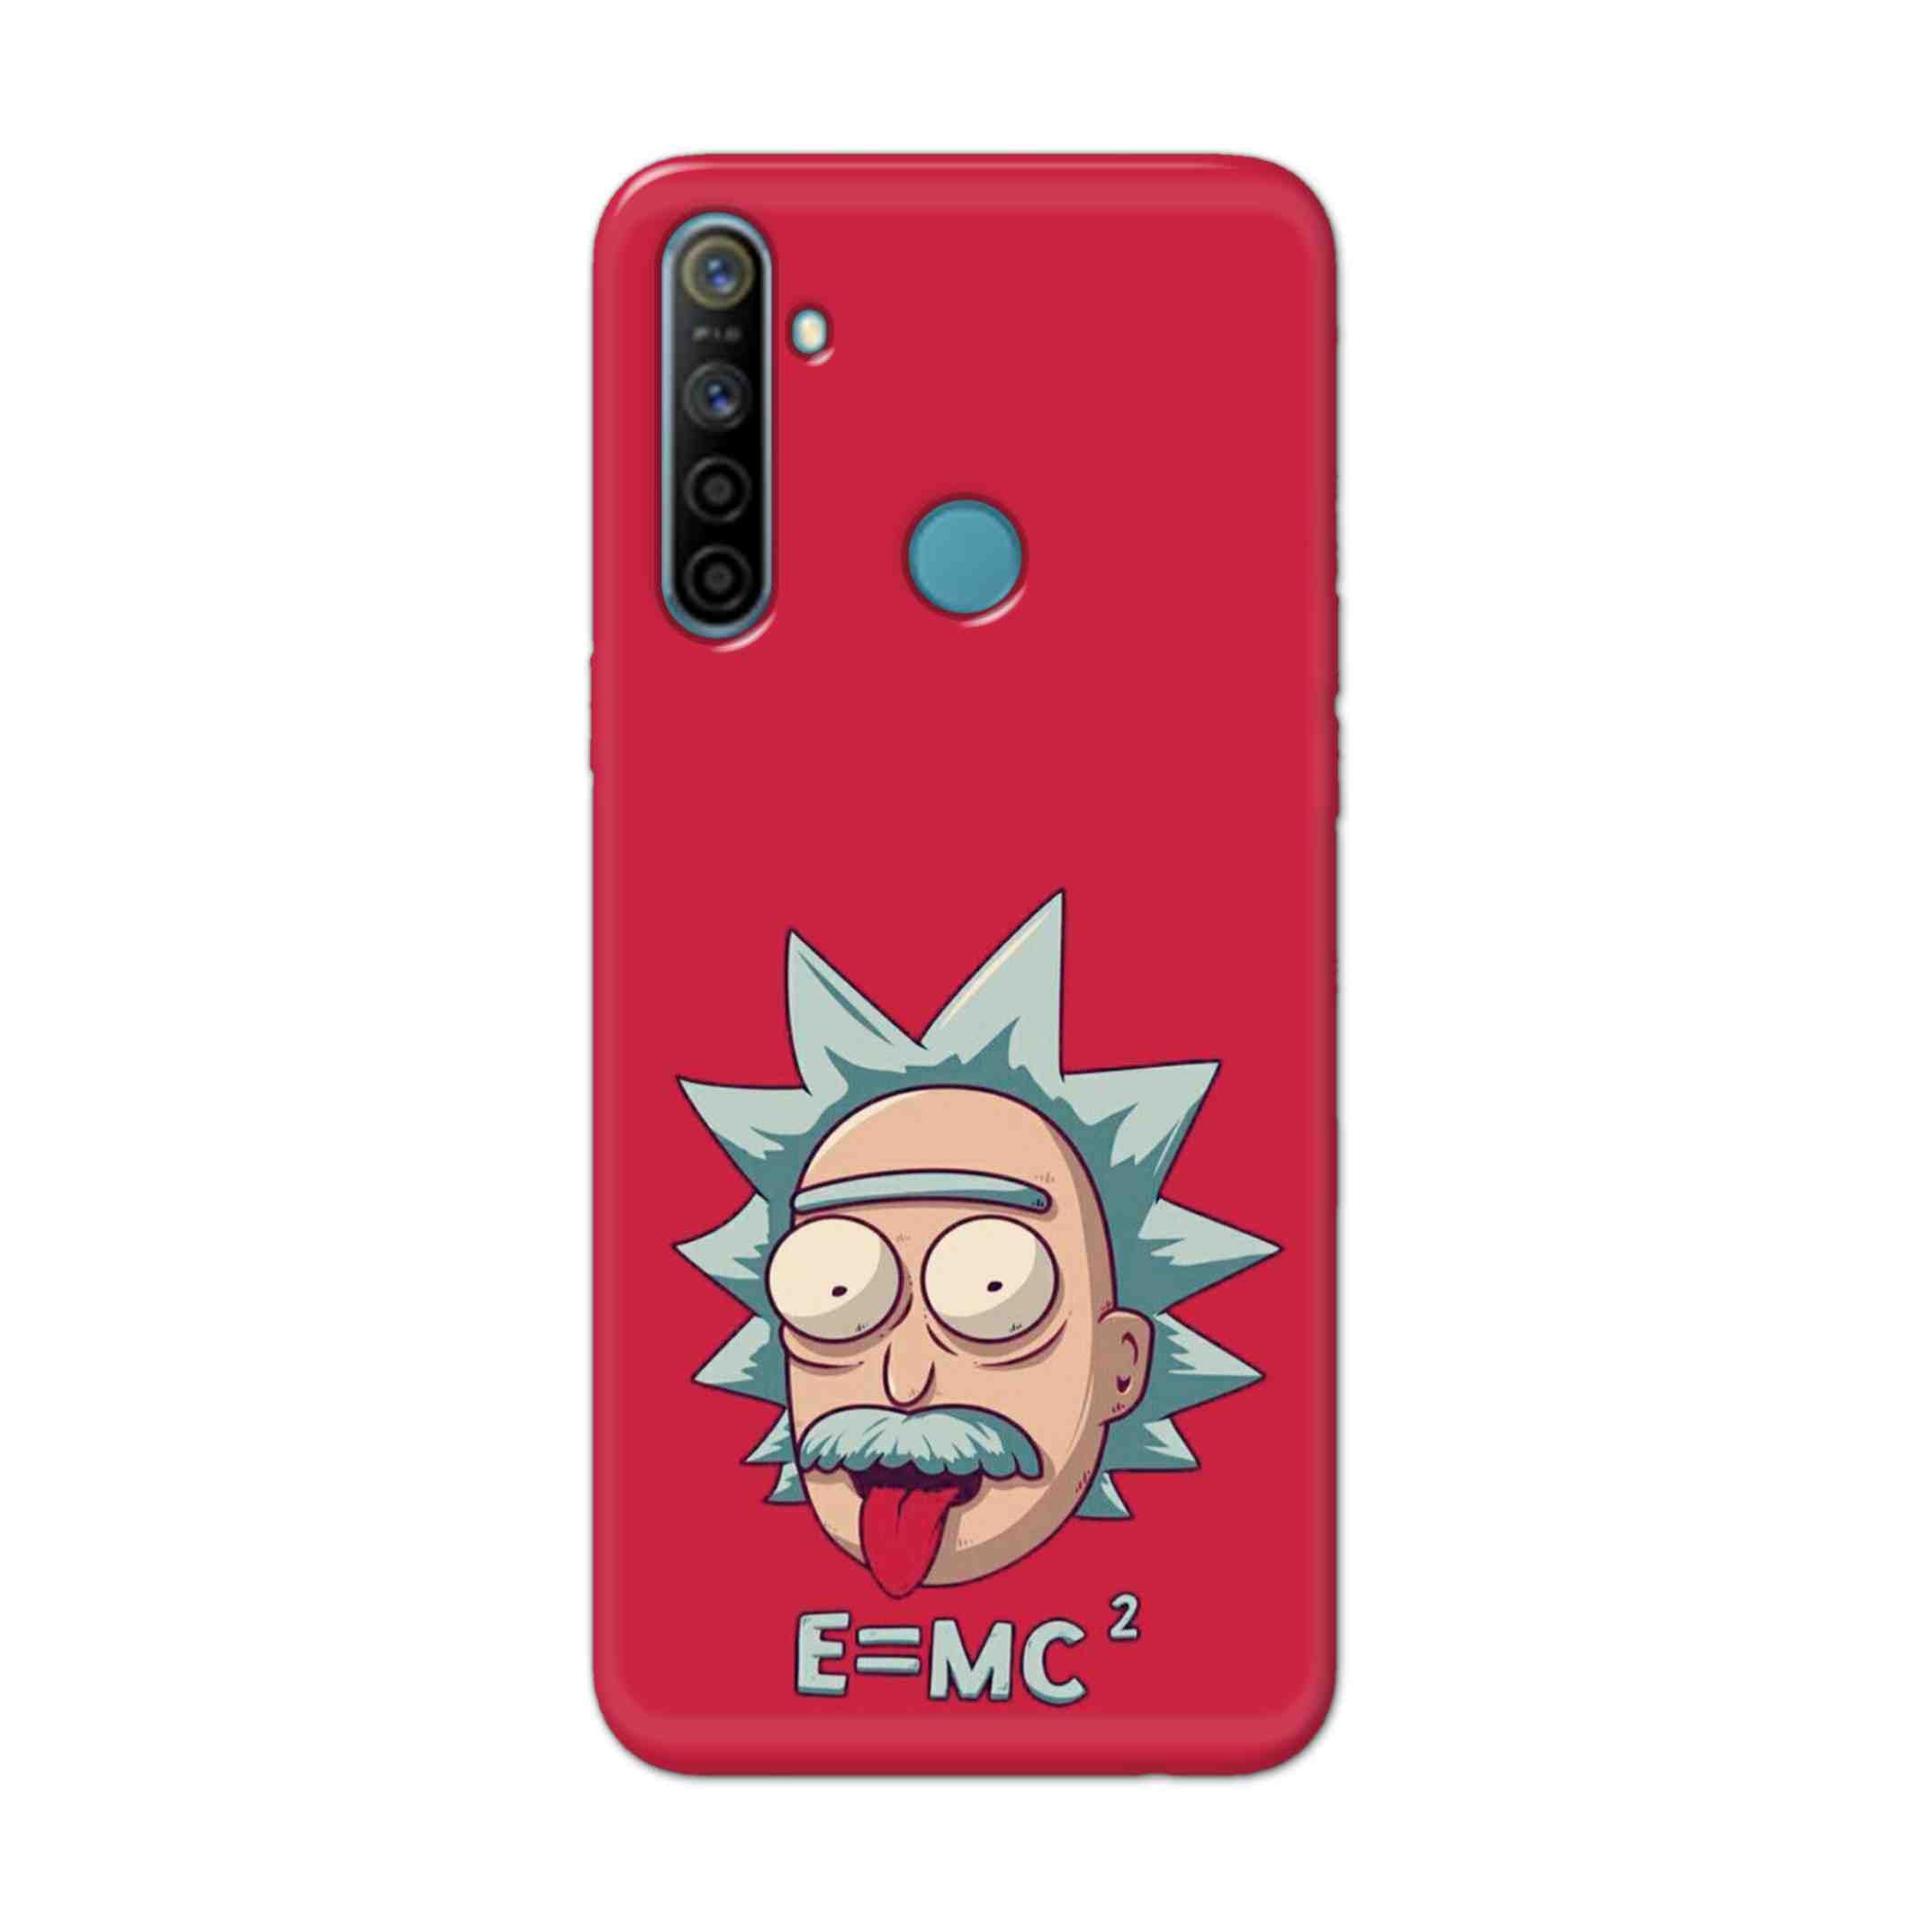 Buy E=Mc Hard Back Mobile Phone Case Cover For Realme 5i Online